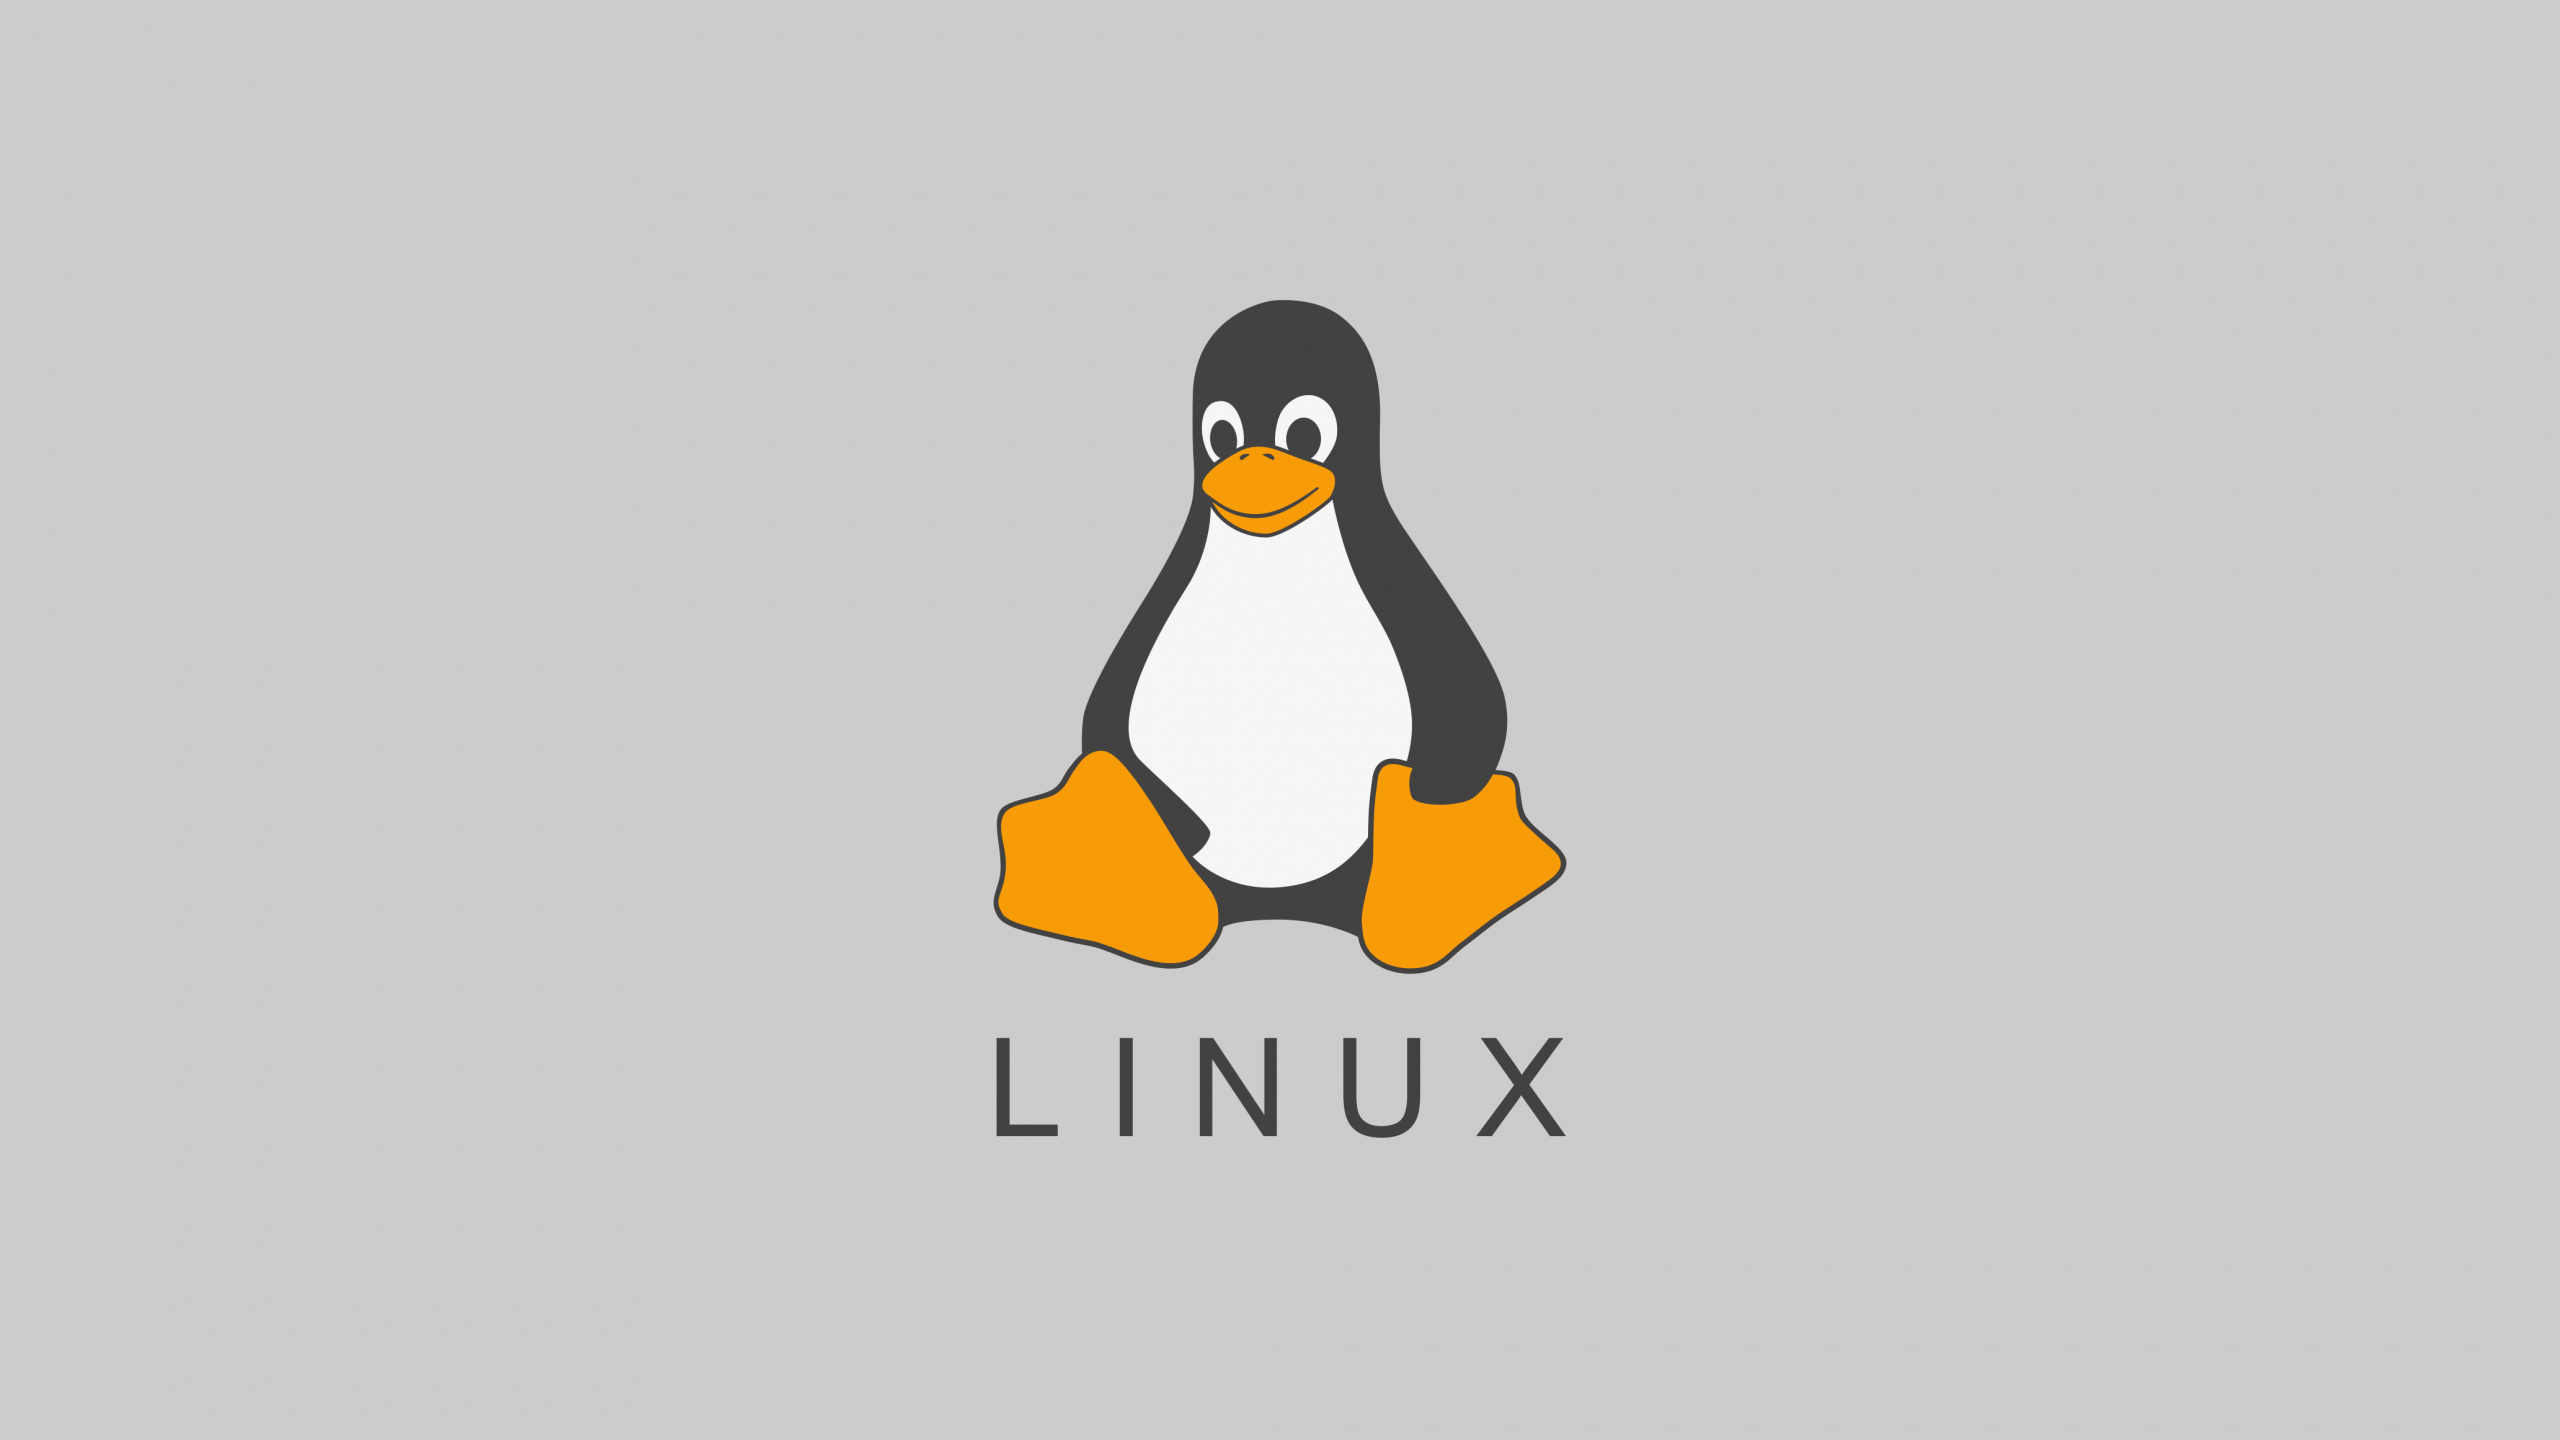 Linux, 晚礼服, Ubuntu, 不会飞的鸟, 鸟 壁纸 2560x1440 允许